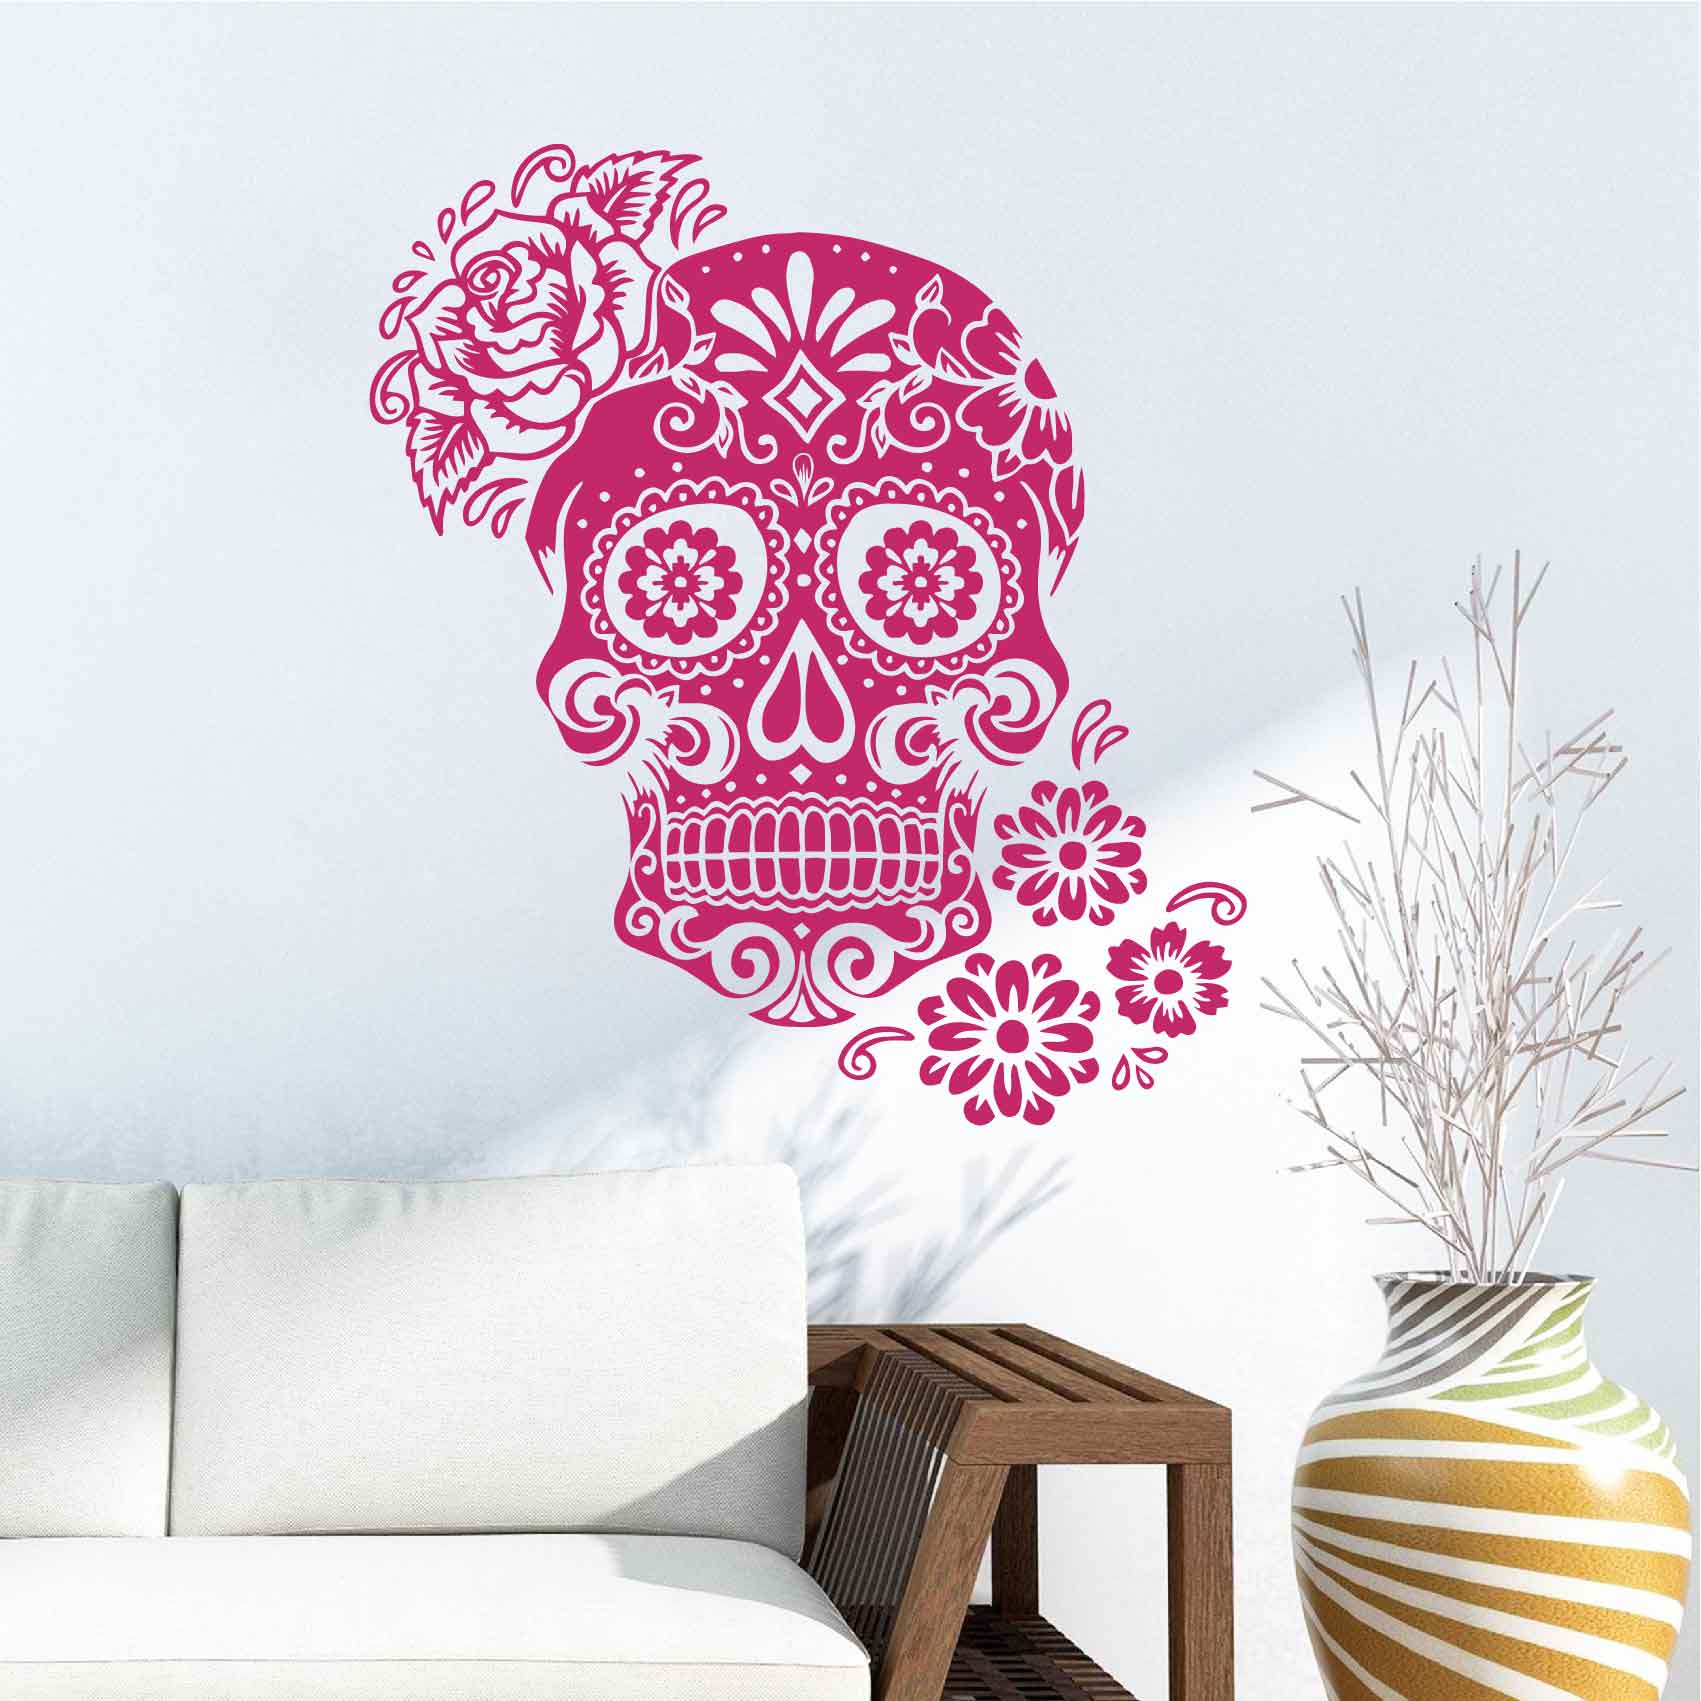 stickers-crane-mexicain-ref2skull-stickers-muraux-design-autocollant-deco-salon-séjour-sticker-mural-art-chambre-cuisine